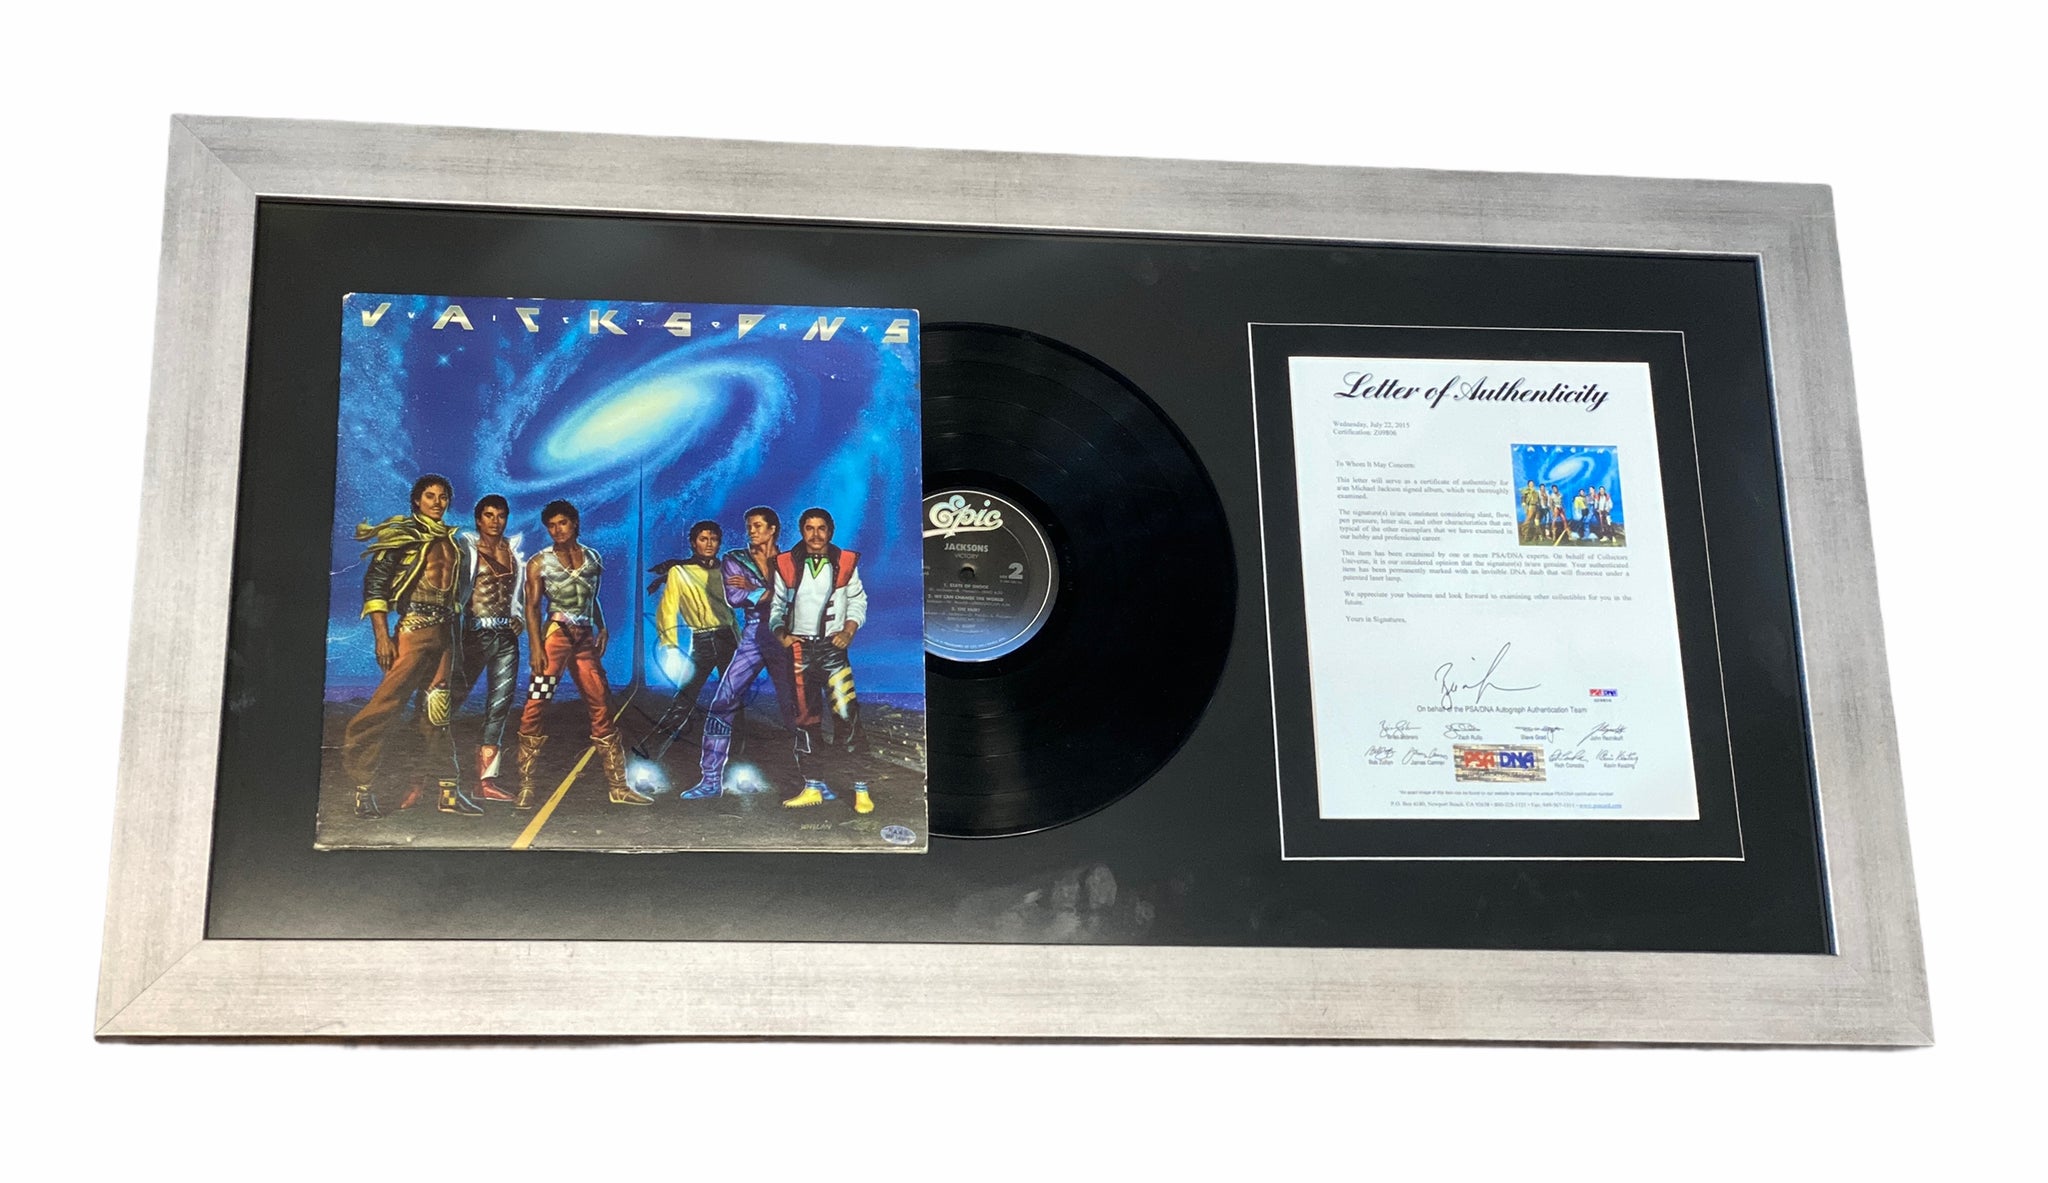 Disco LP / Michael Jackson / Jackson 5 – On Field Mx